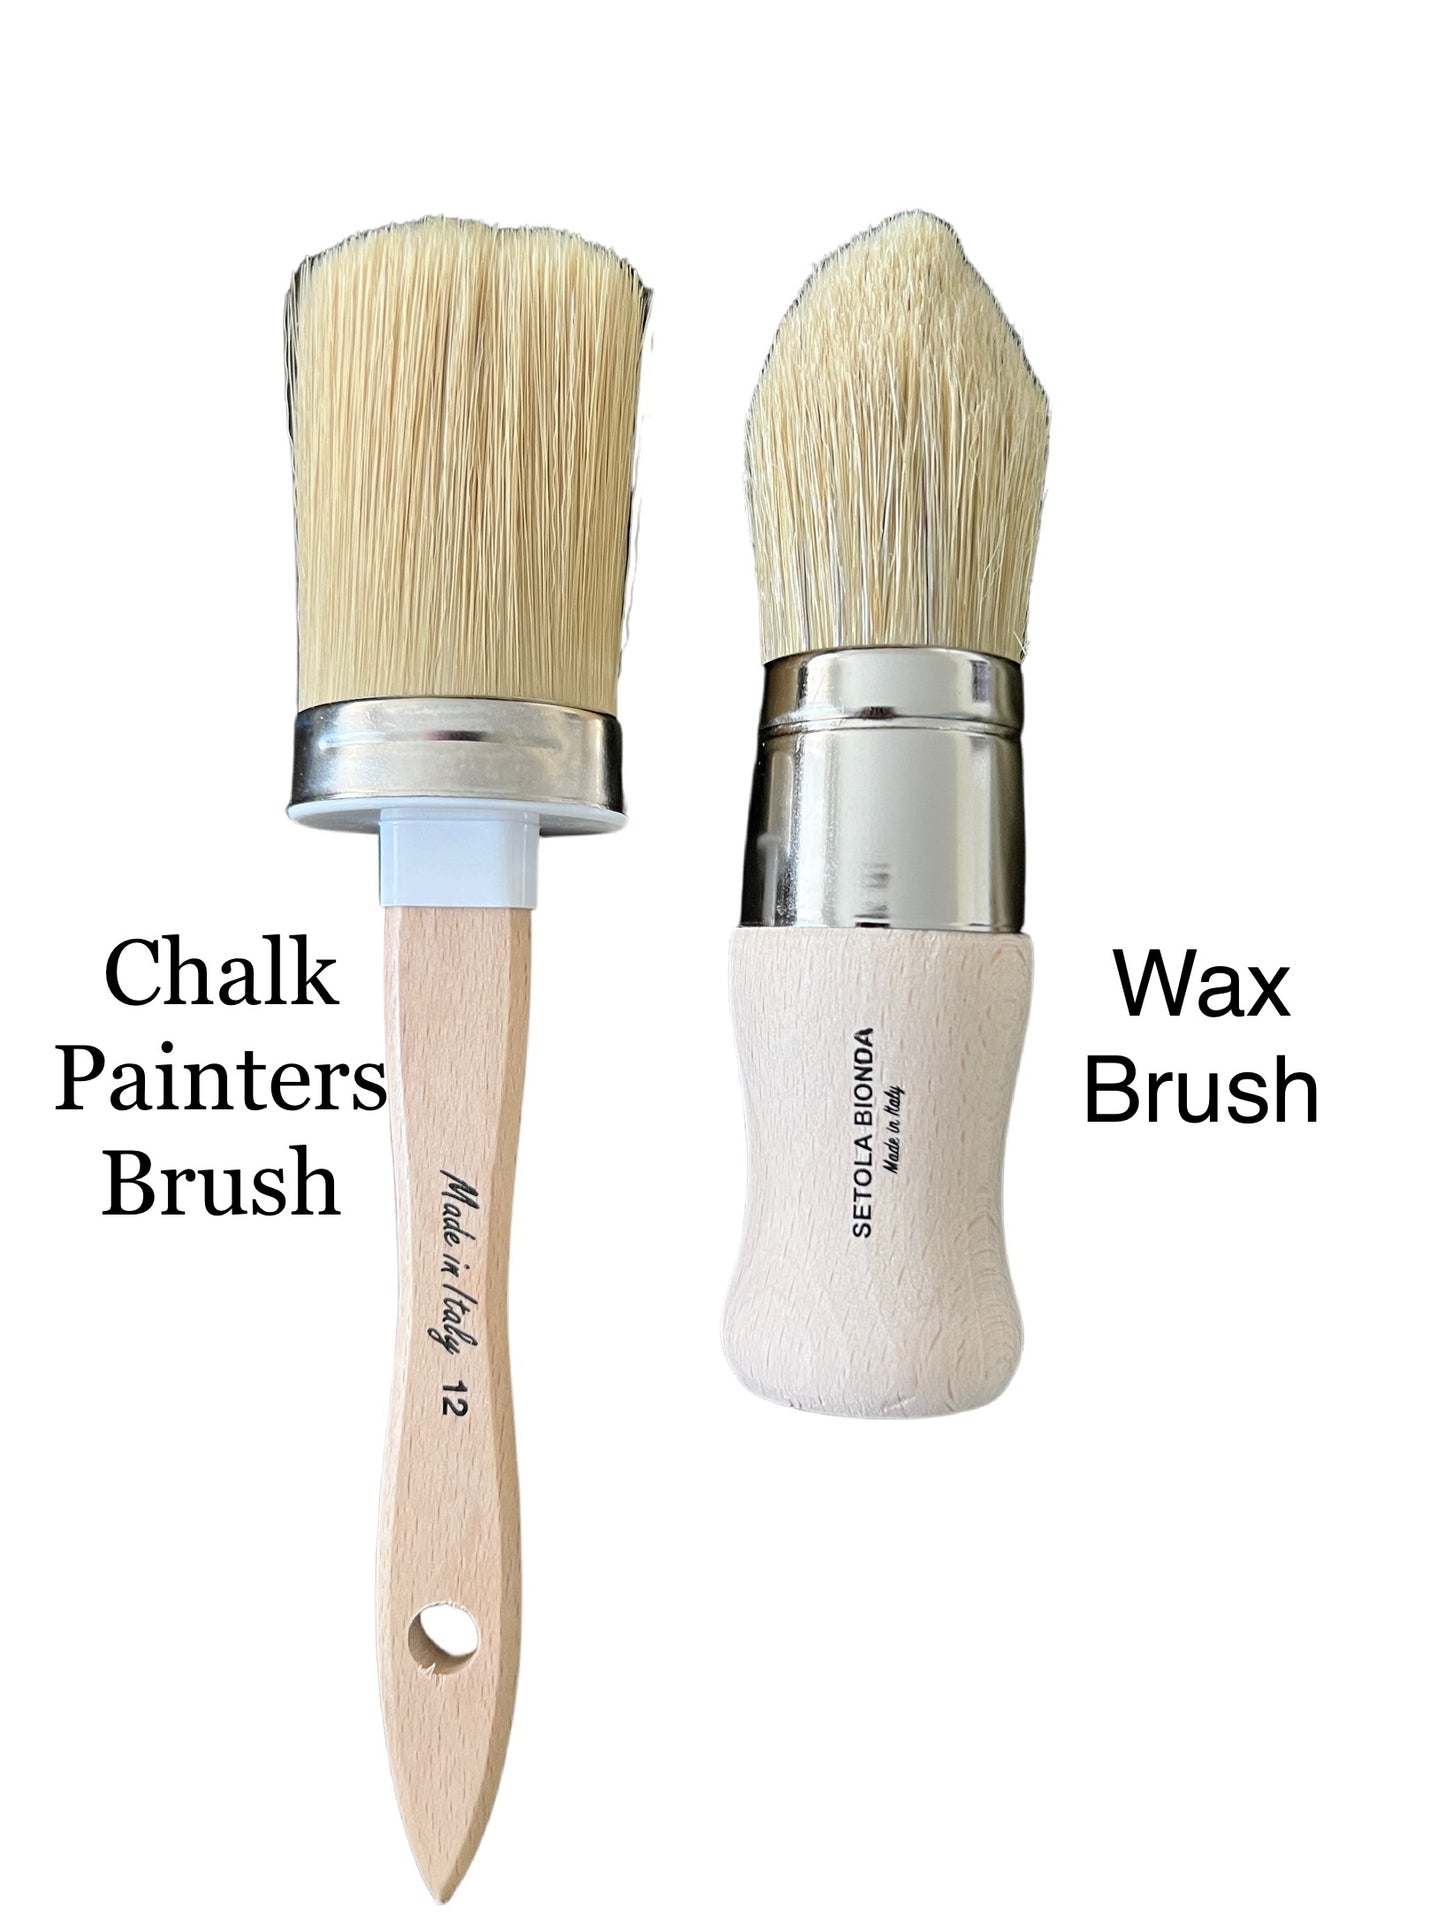 NEW: Chalk Painter's Basics Italian Brush set